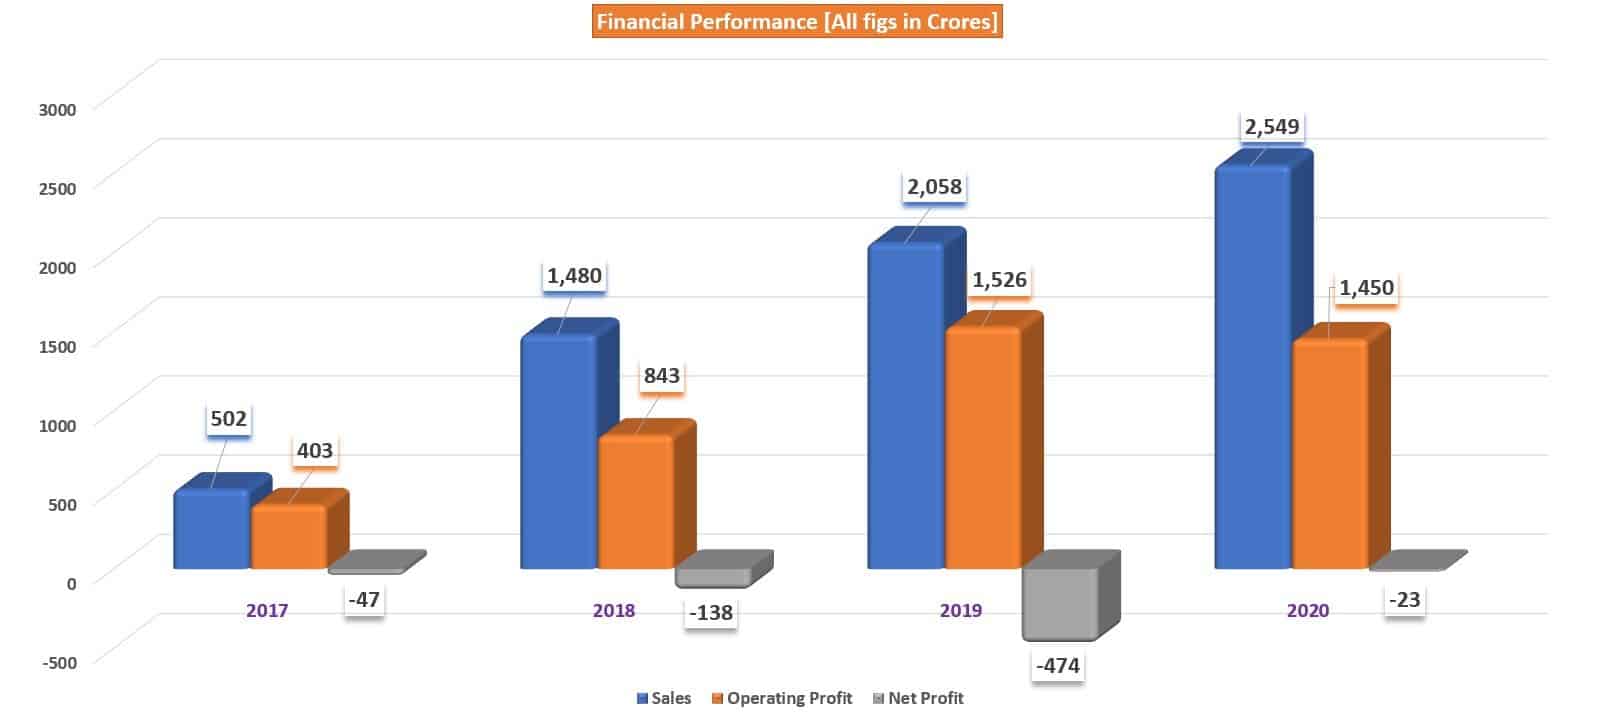 Financial performance of Adani Green Energy Ltd